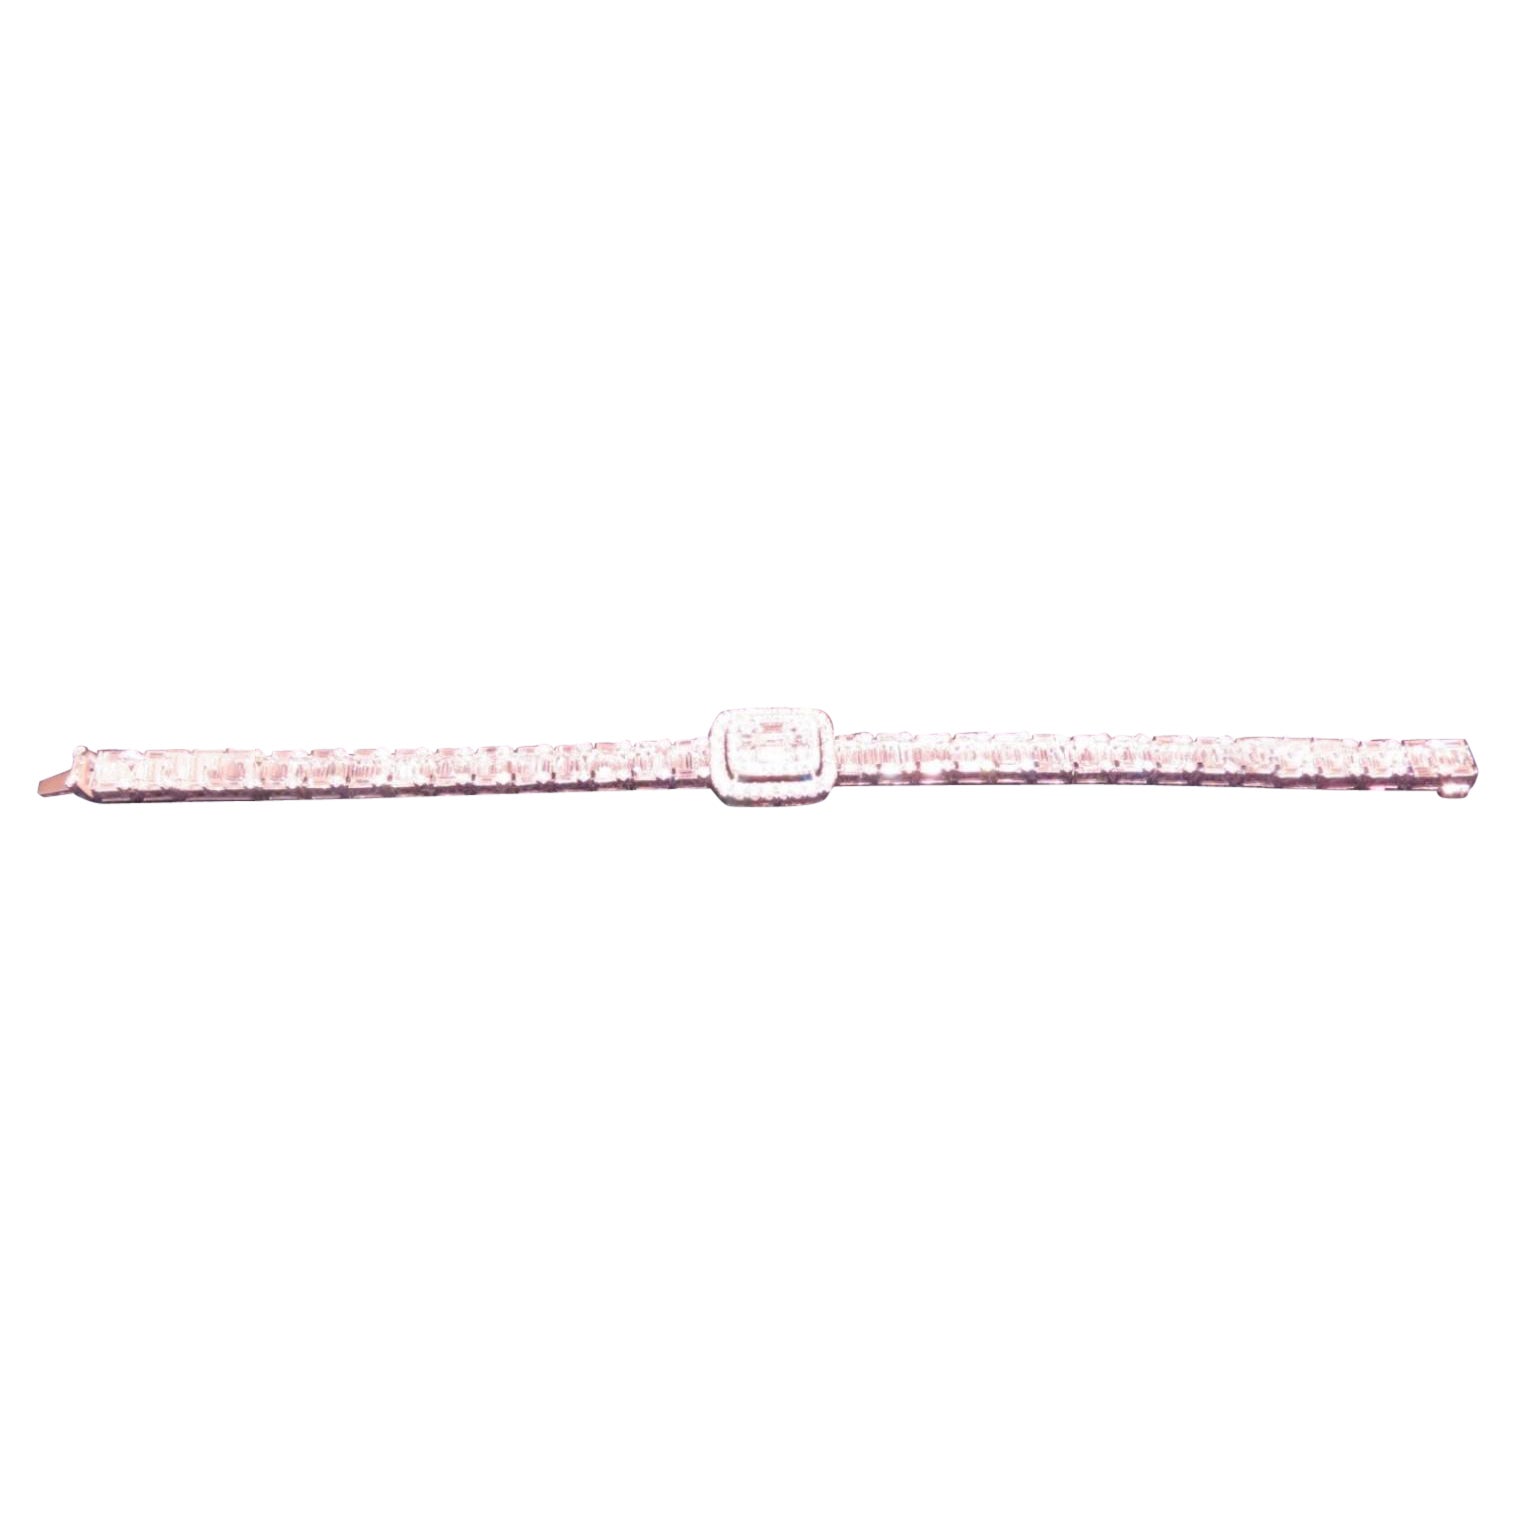 NWT $65, 238 18KT Gorgeous Glittering Fancy Large Baguette Tennis Bracelet For Sale